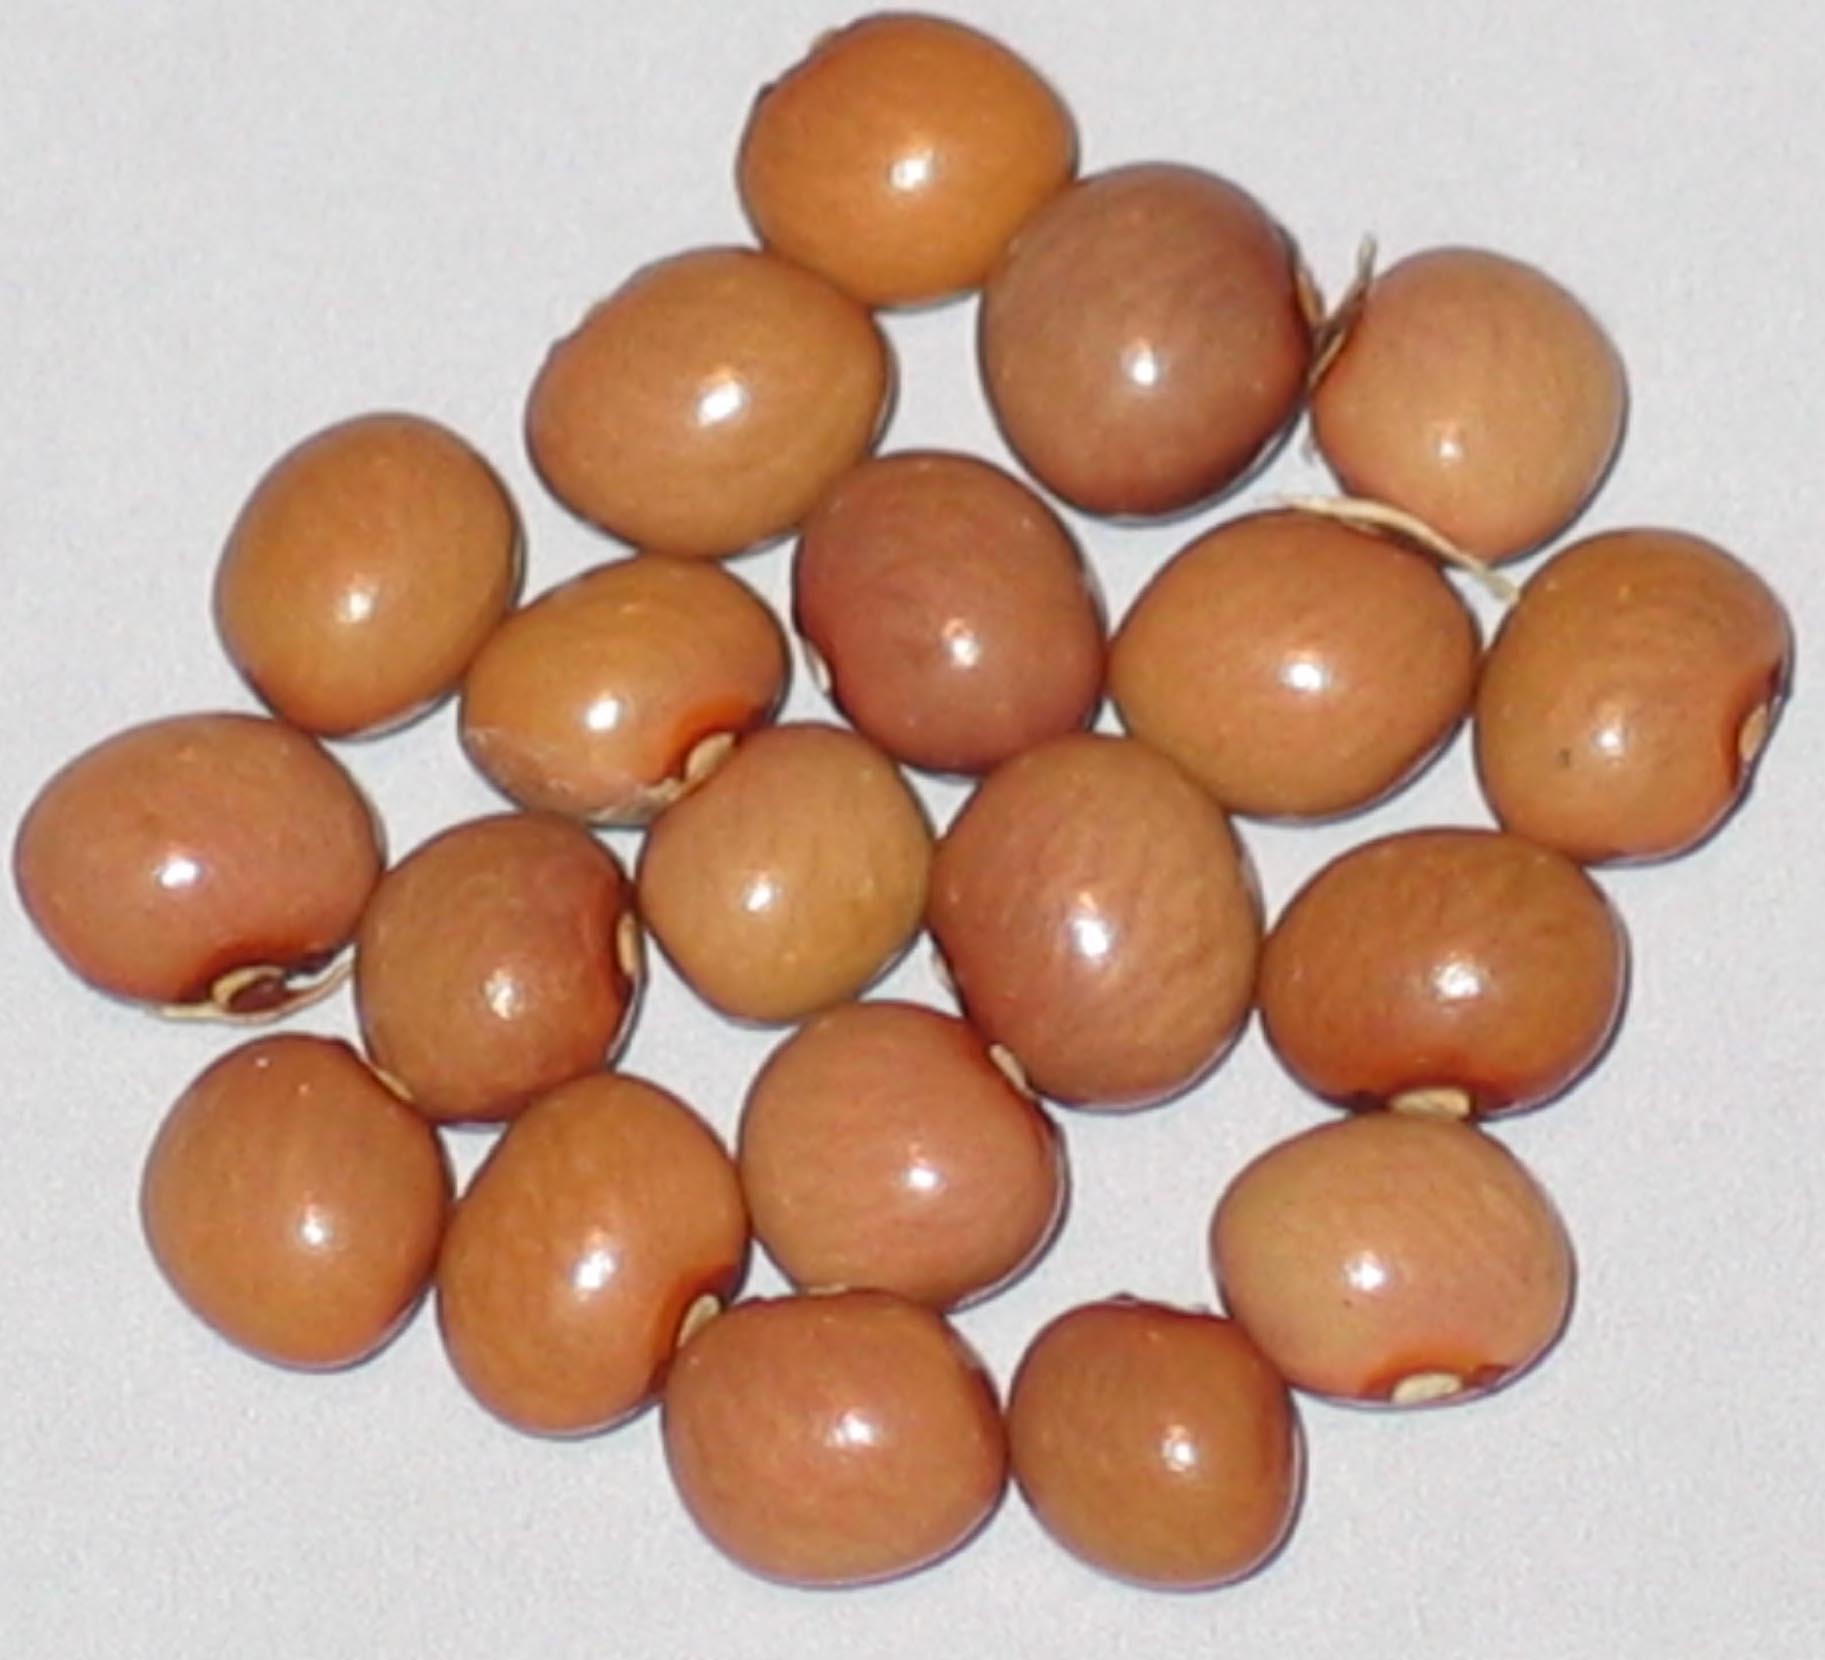 image of Herrenbohnli beans